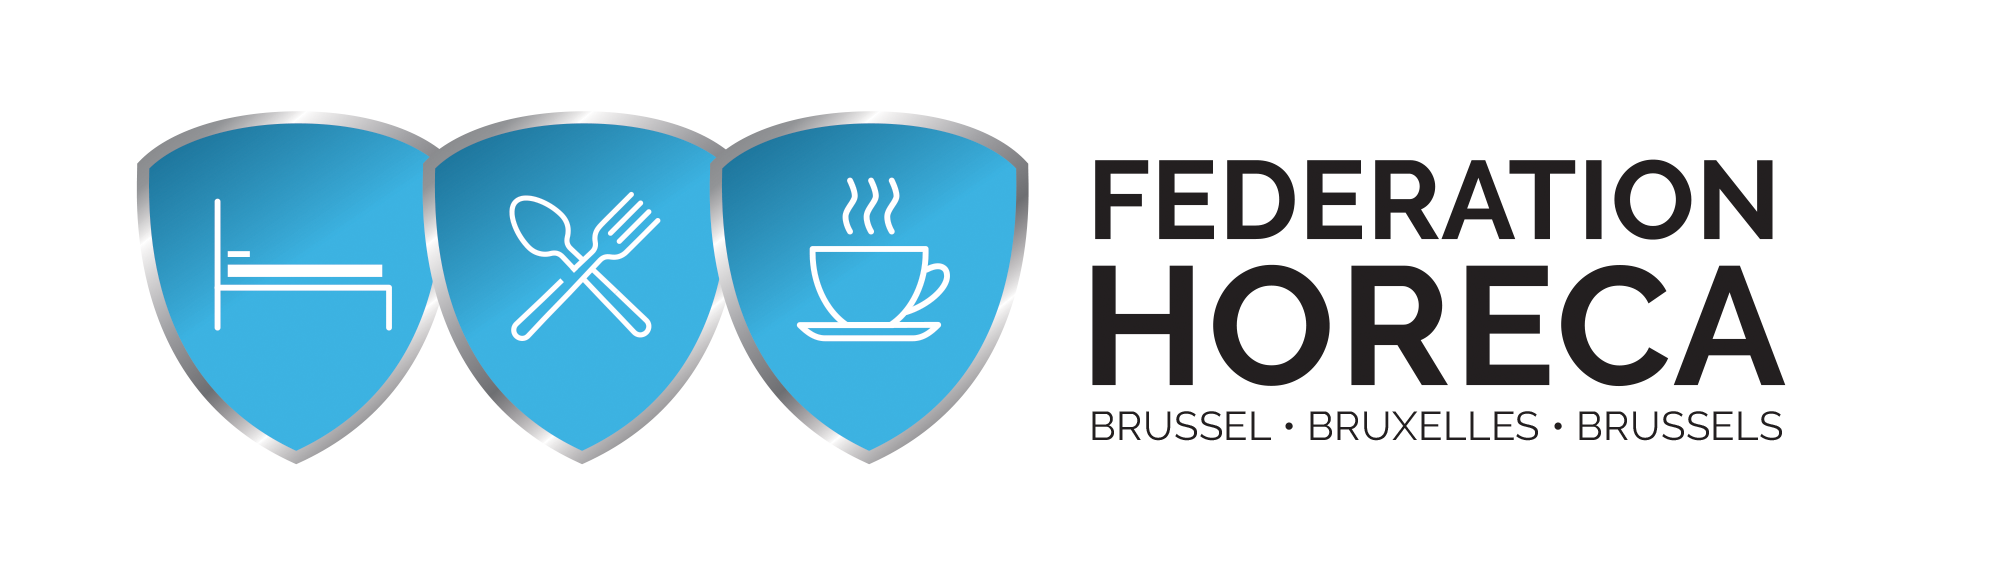 Logo_Federation_horeca_Brussels